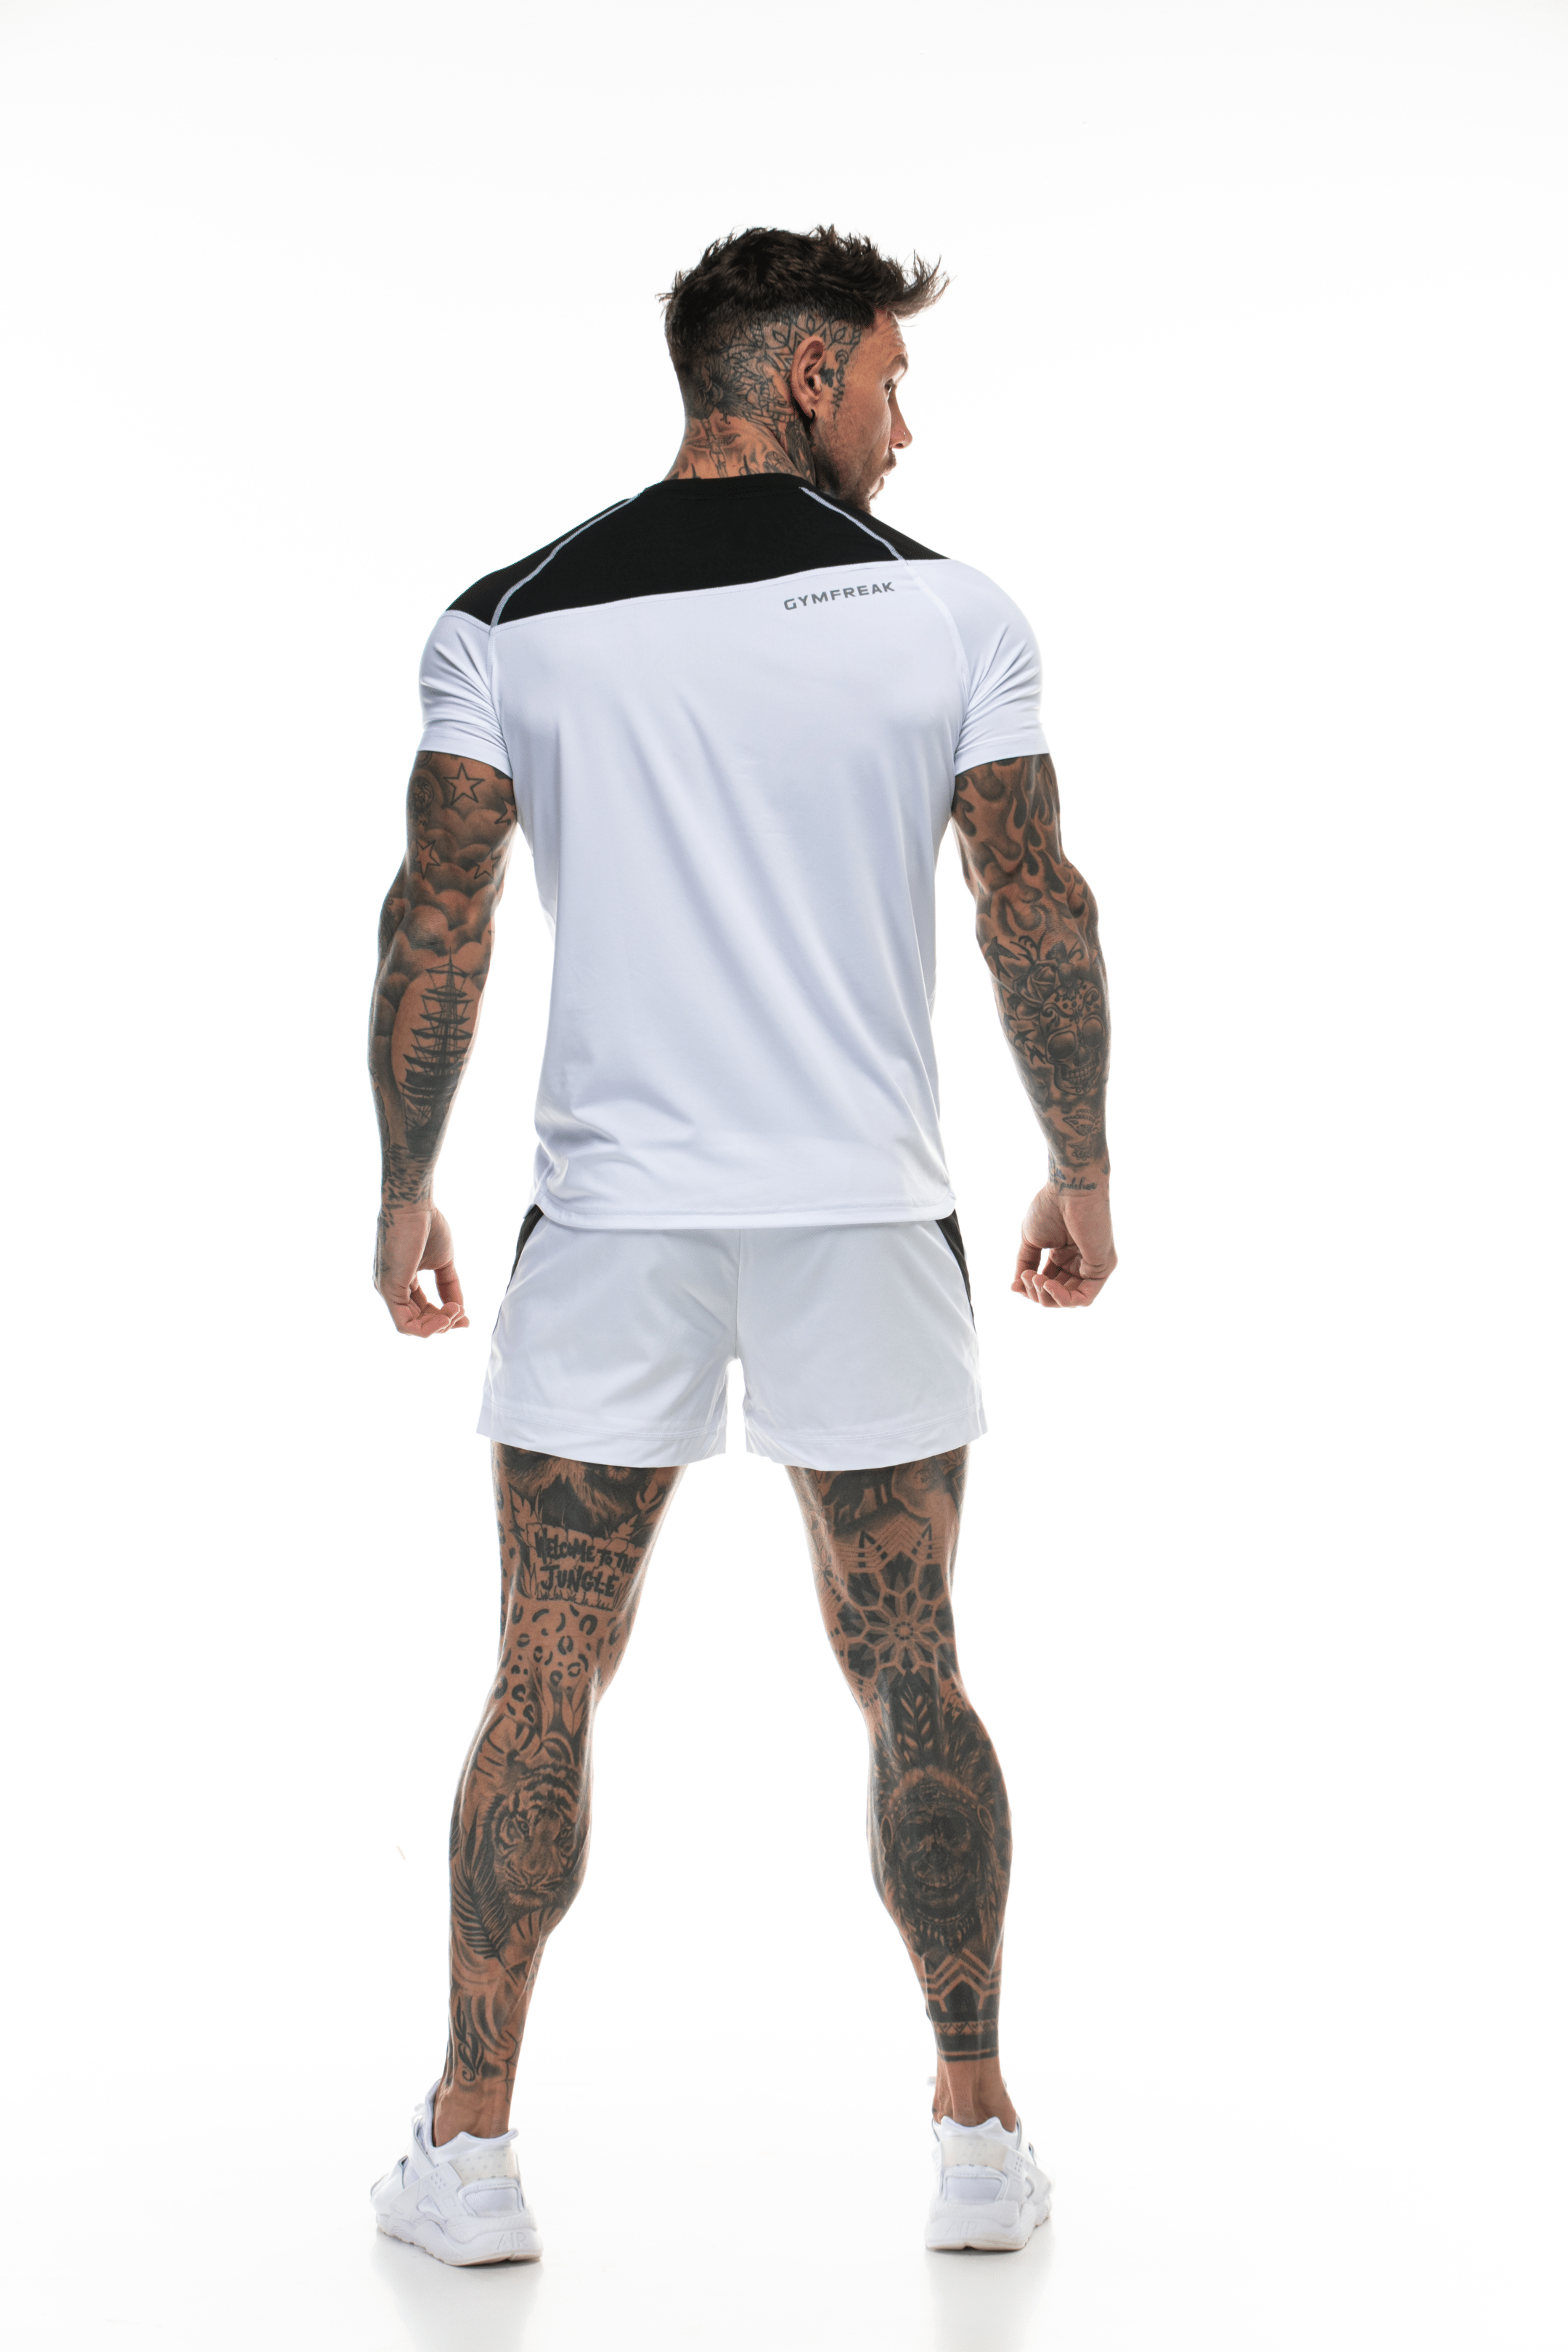 T-Shirt GymFreak Homme Pro - Blanc 